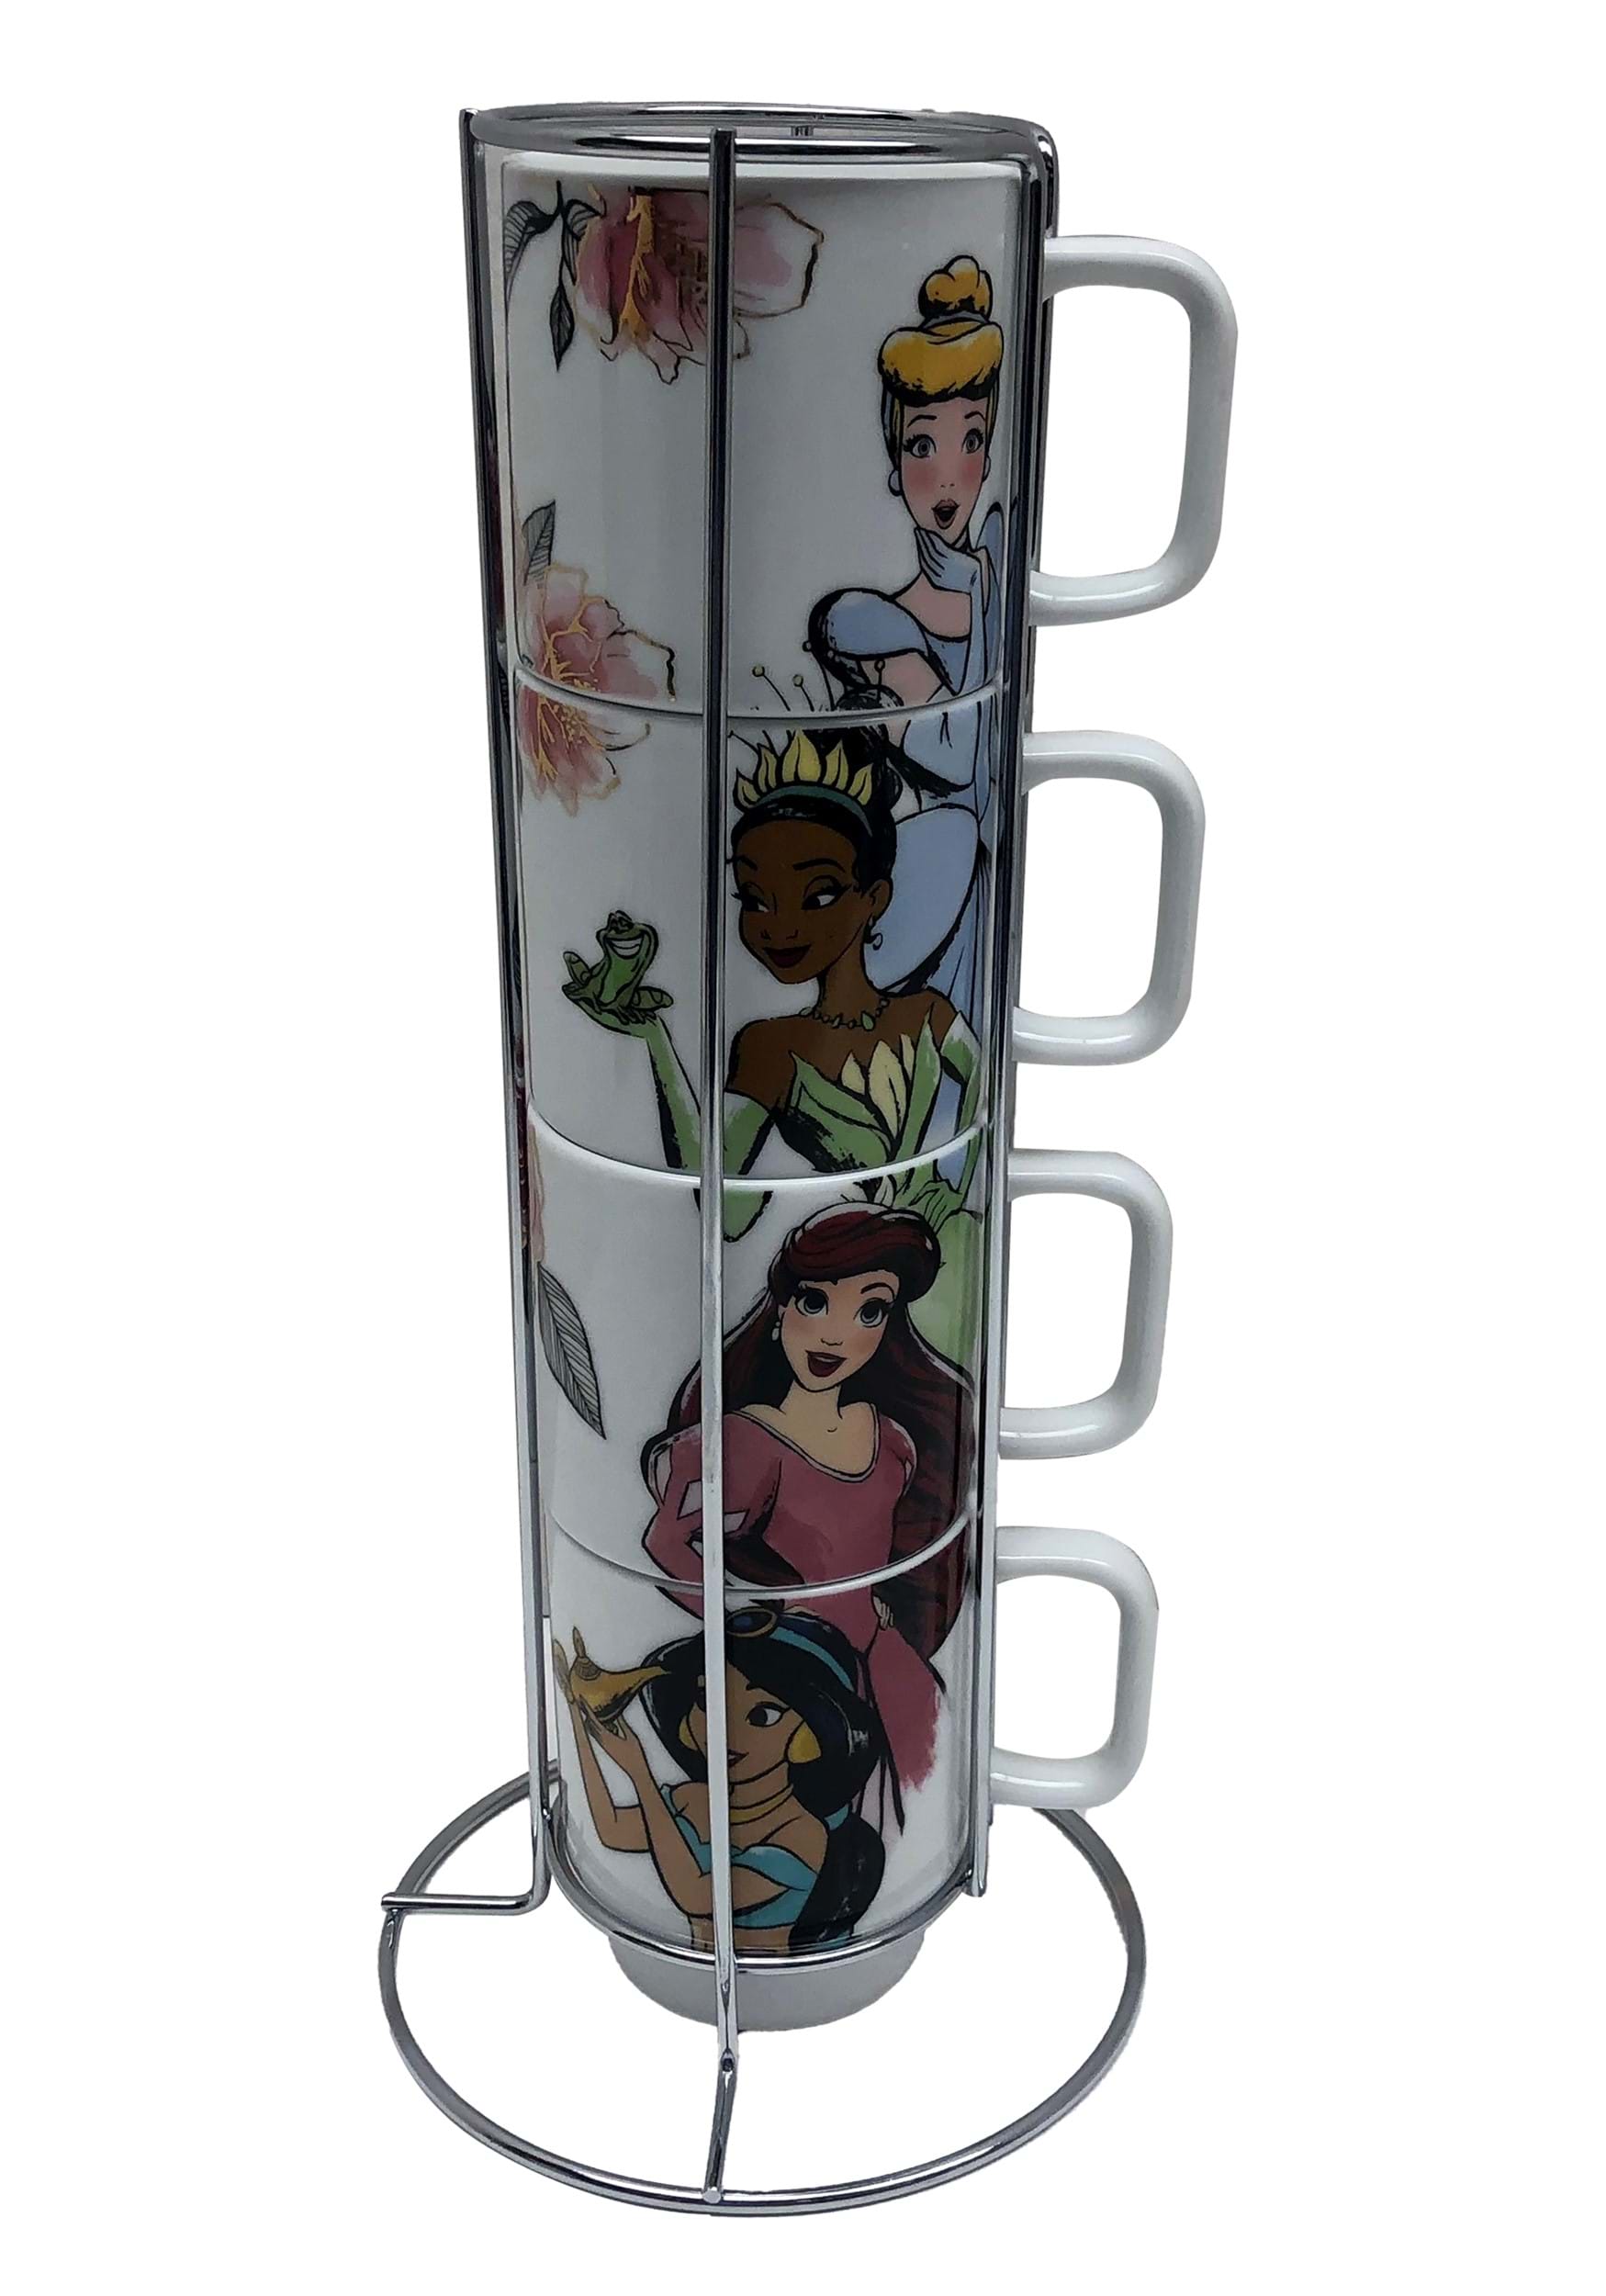 https://images.fun.com/products/84046/1-1/disney-princess-be-kind-set-of-4-stacking-mugs.jpg